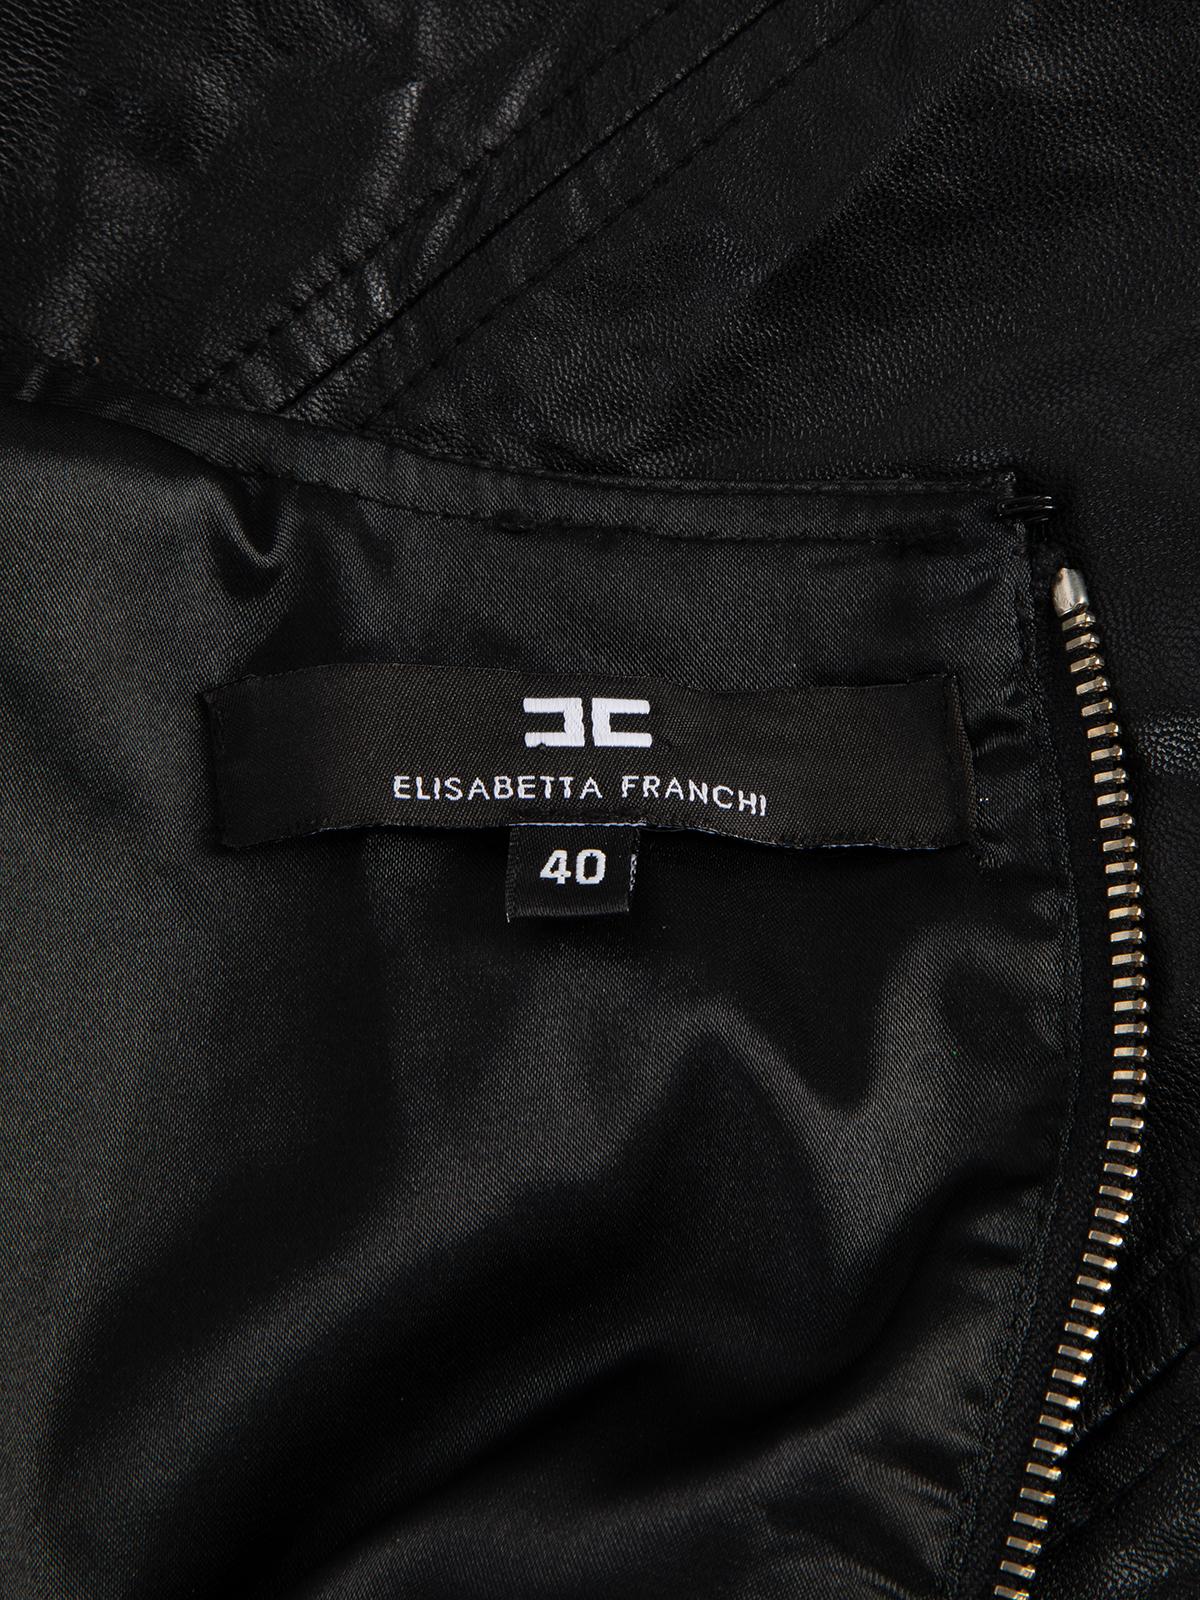 Pre-Loved Elisabetta Franchi Women's Black Knee Length Faux Leather Dress 1